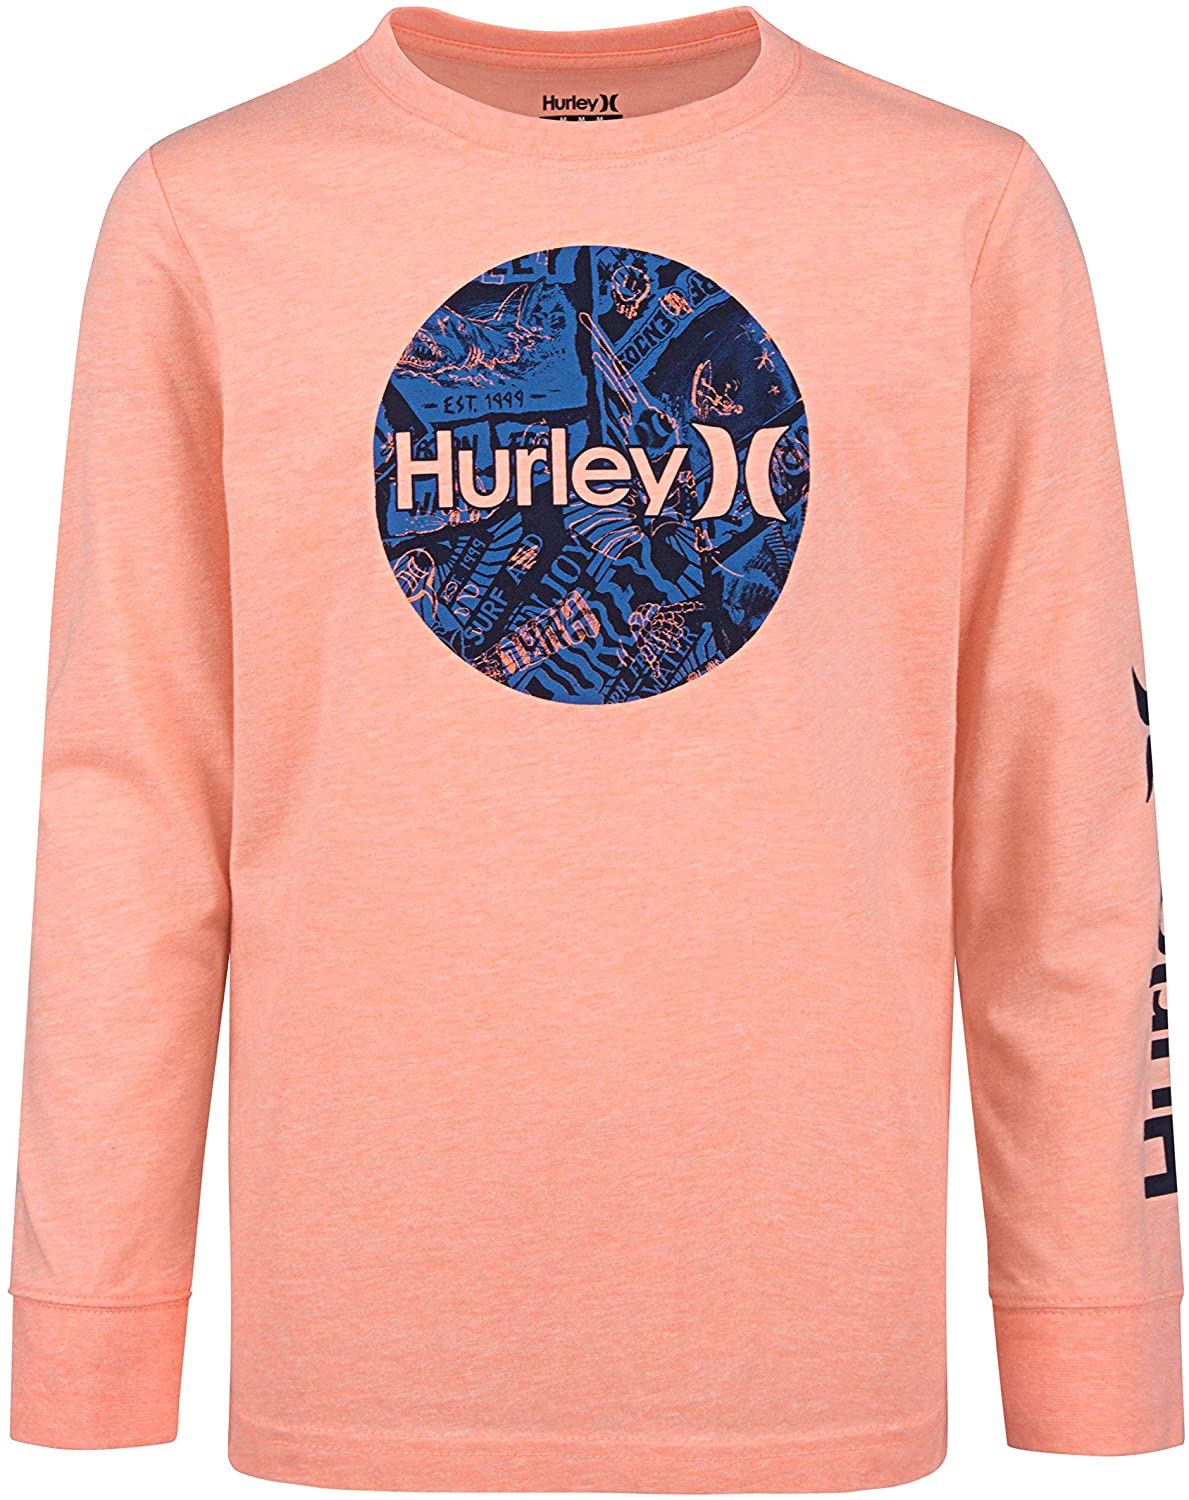 Hurley Boys Long Sleeve Graphic T-Shirt 